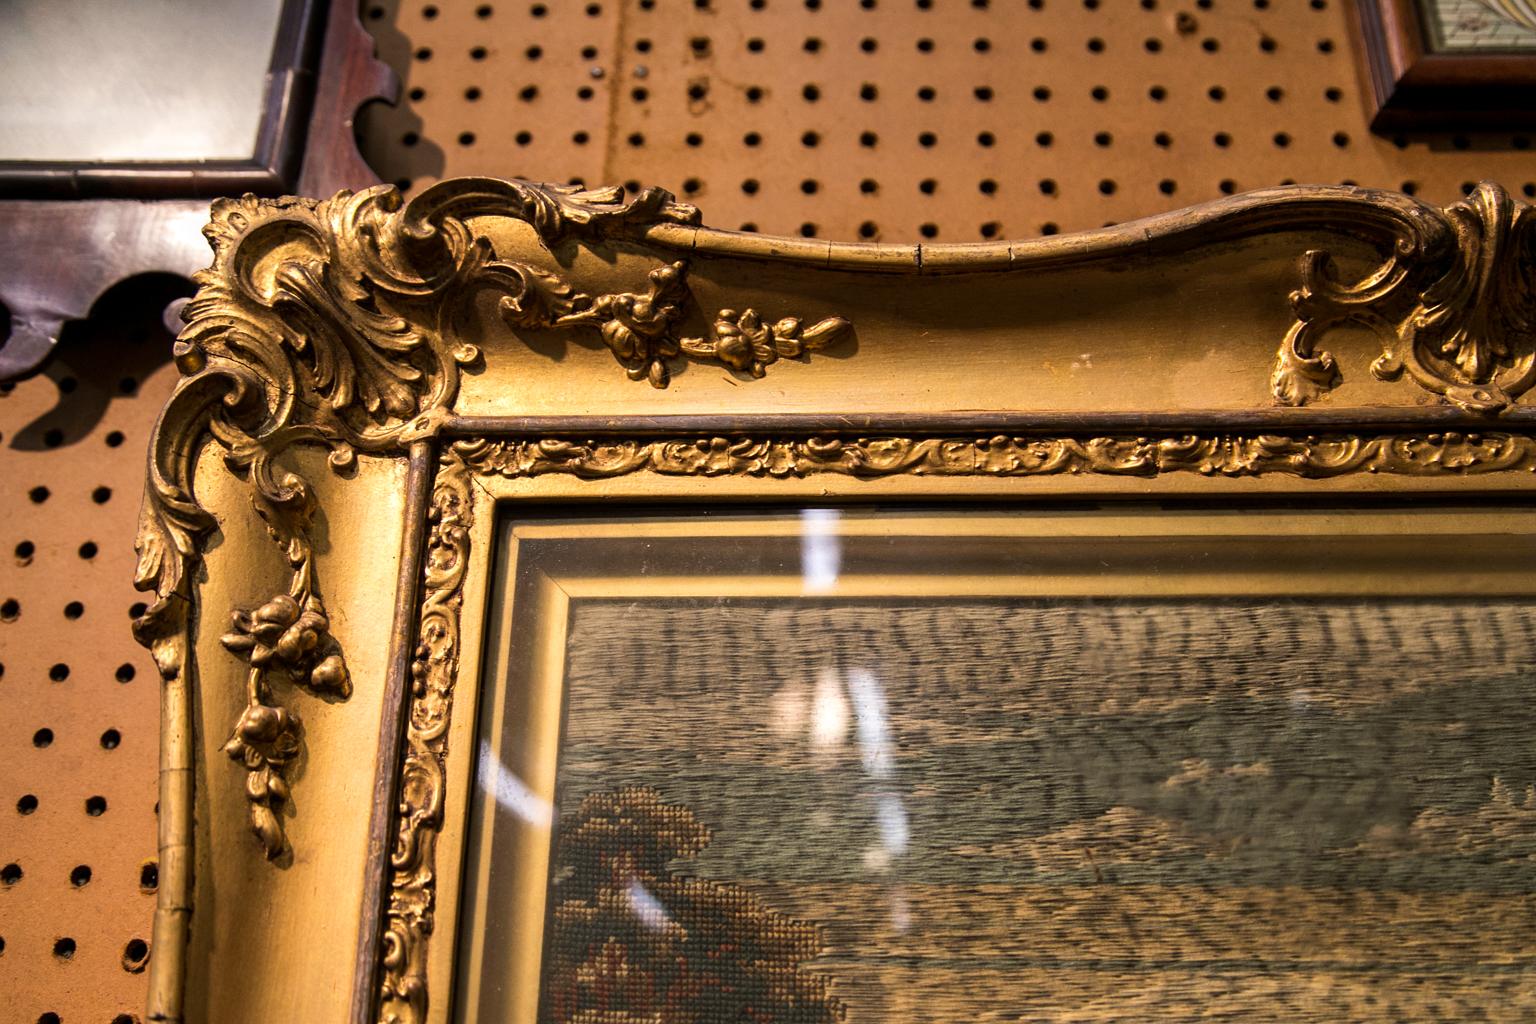 Mid-19th Century English Needlework in Gold Leaf Frame